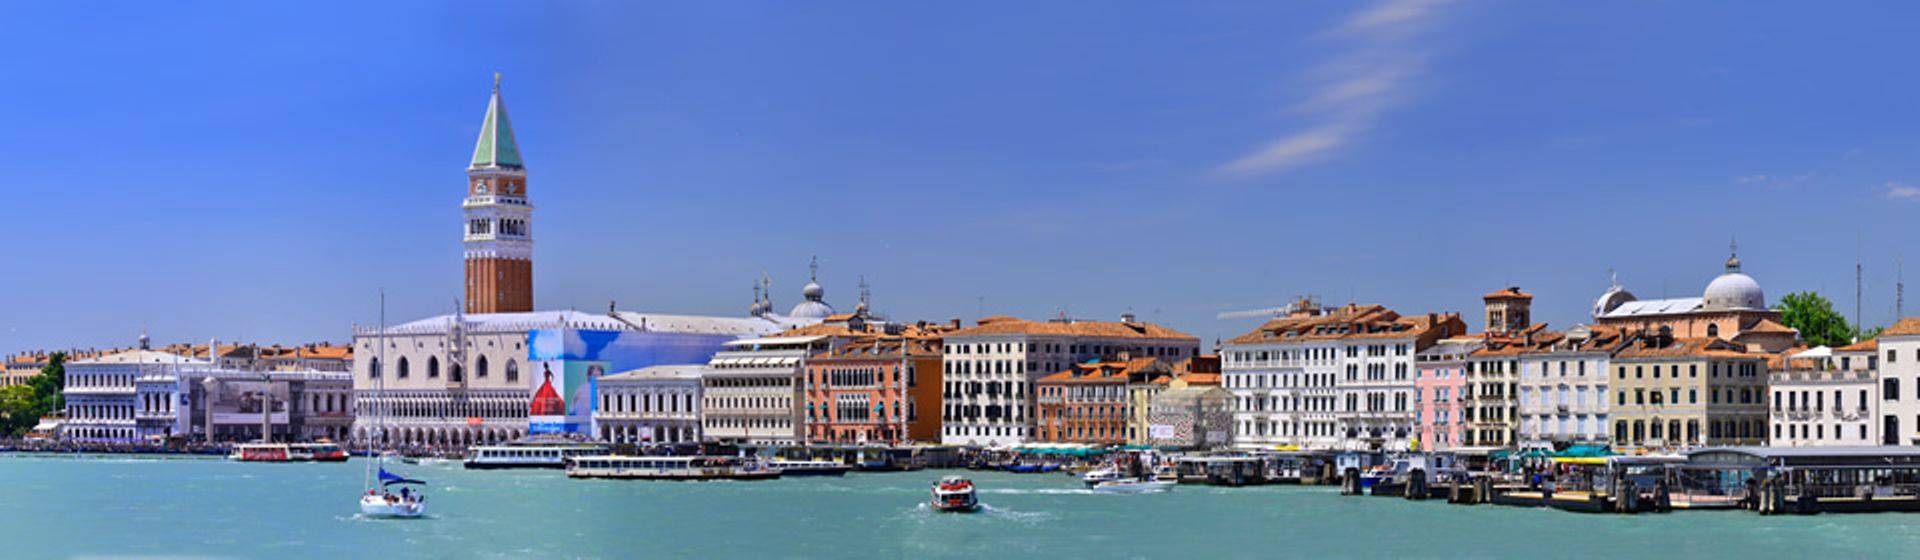 Holidays to Venice Image